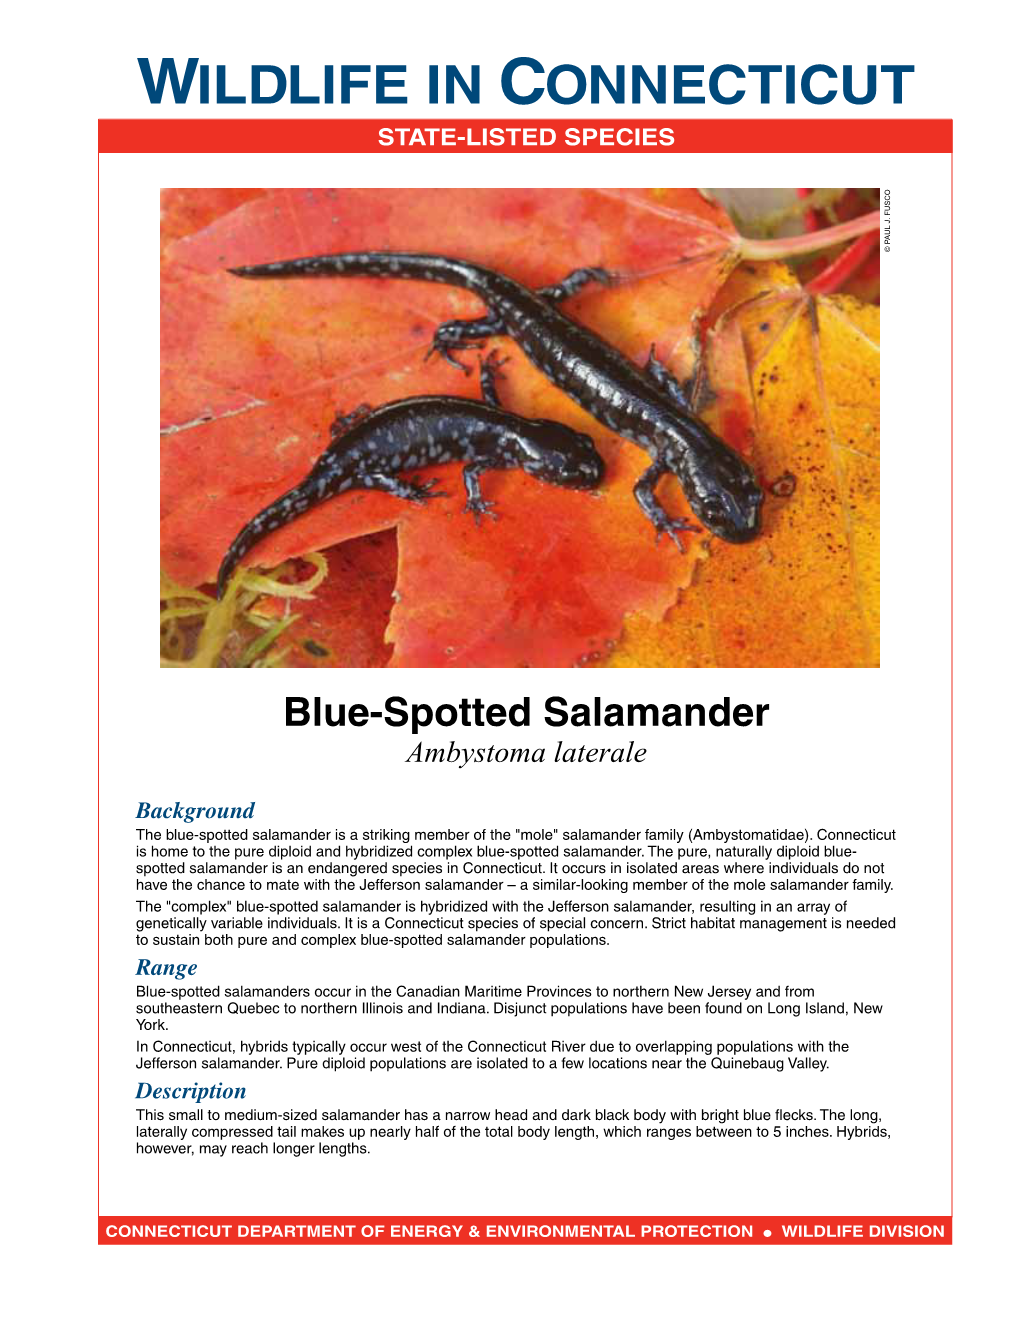 Blue-Spotted Salamander Fact Sheet